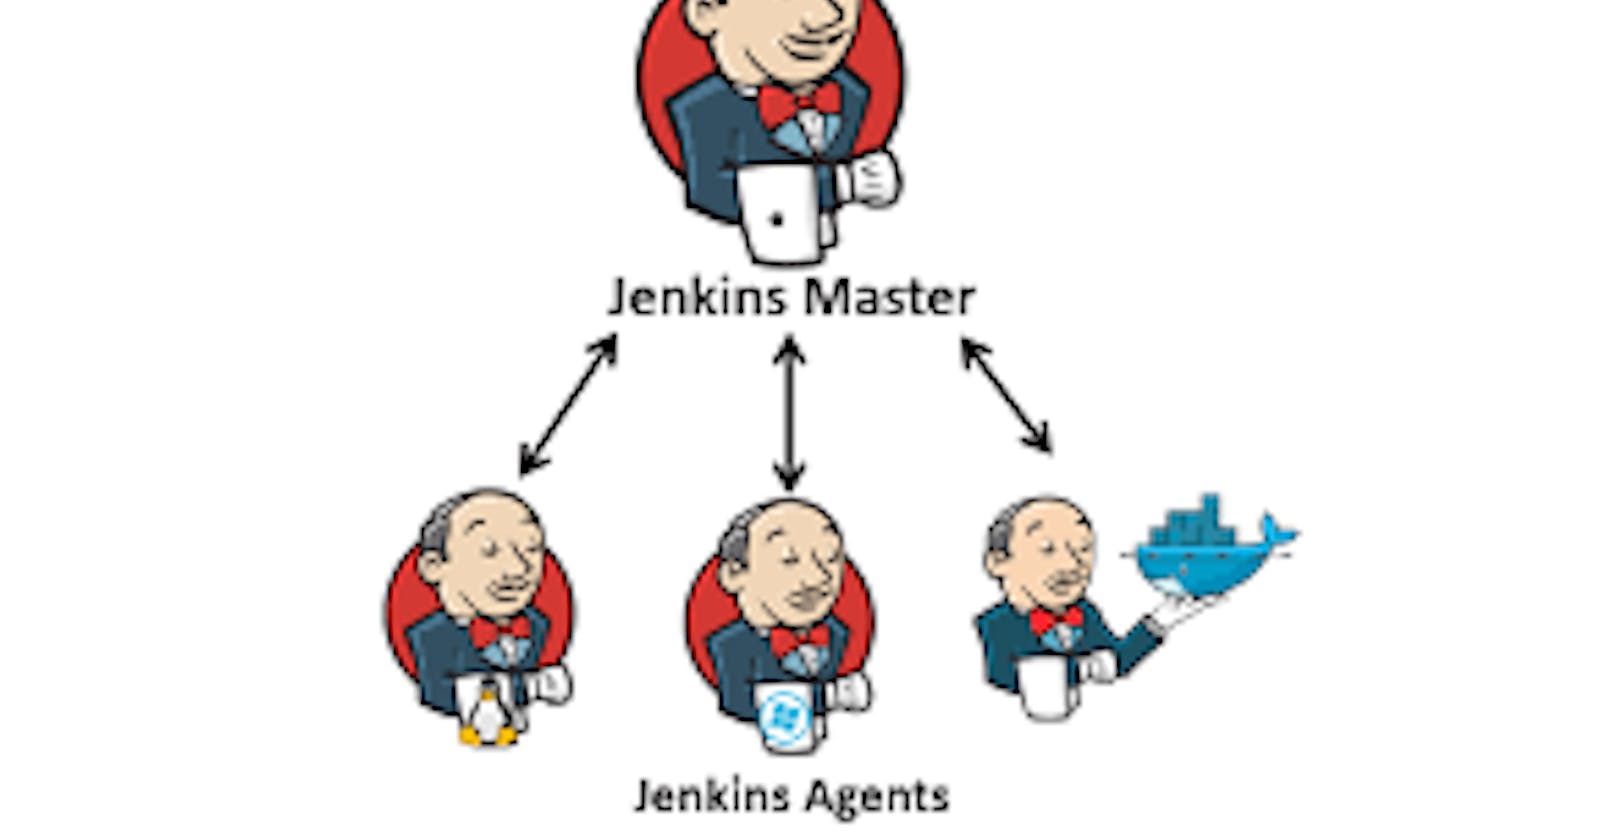 Day 28 Task: Jenkins Agent